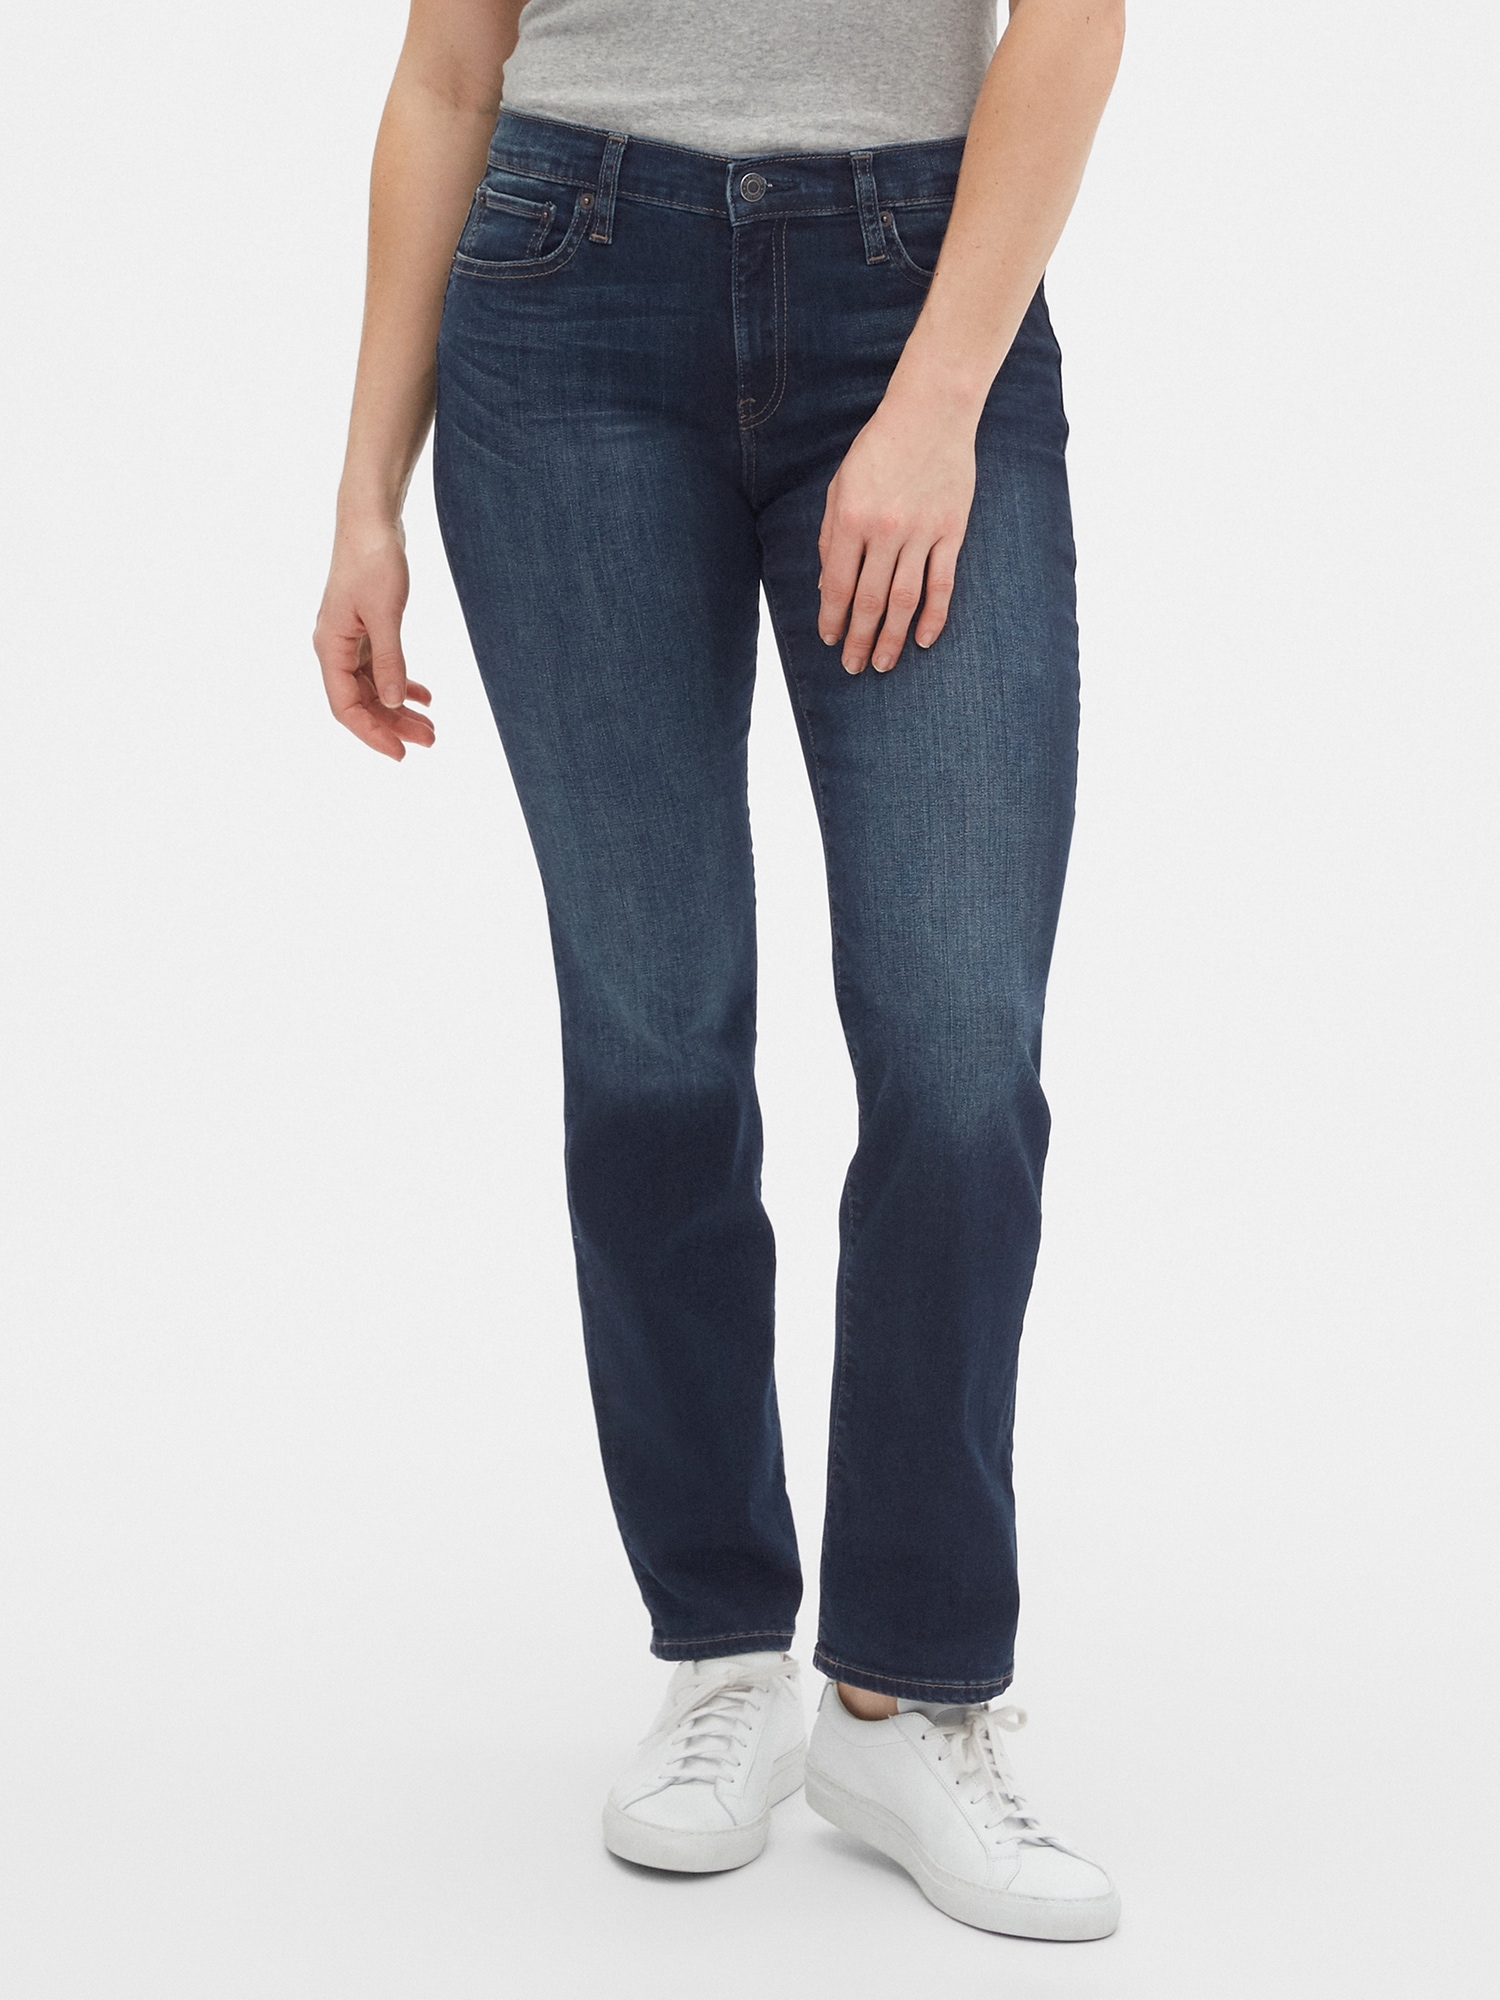 gap canada jeans